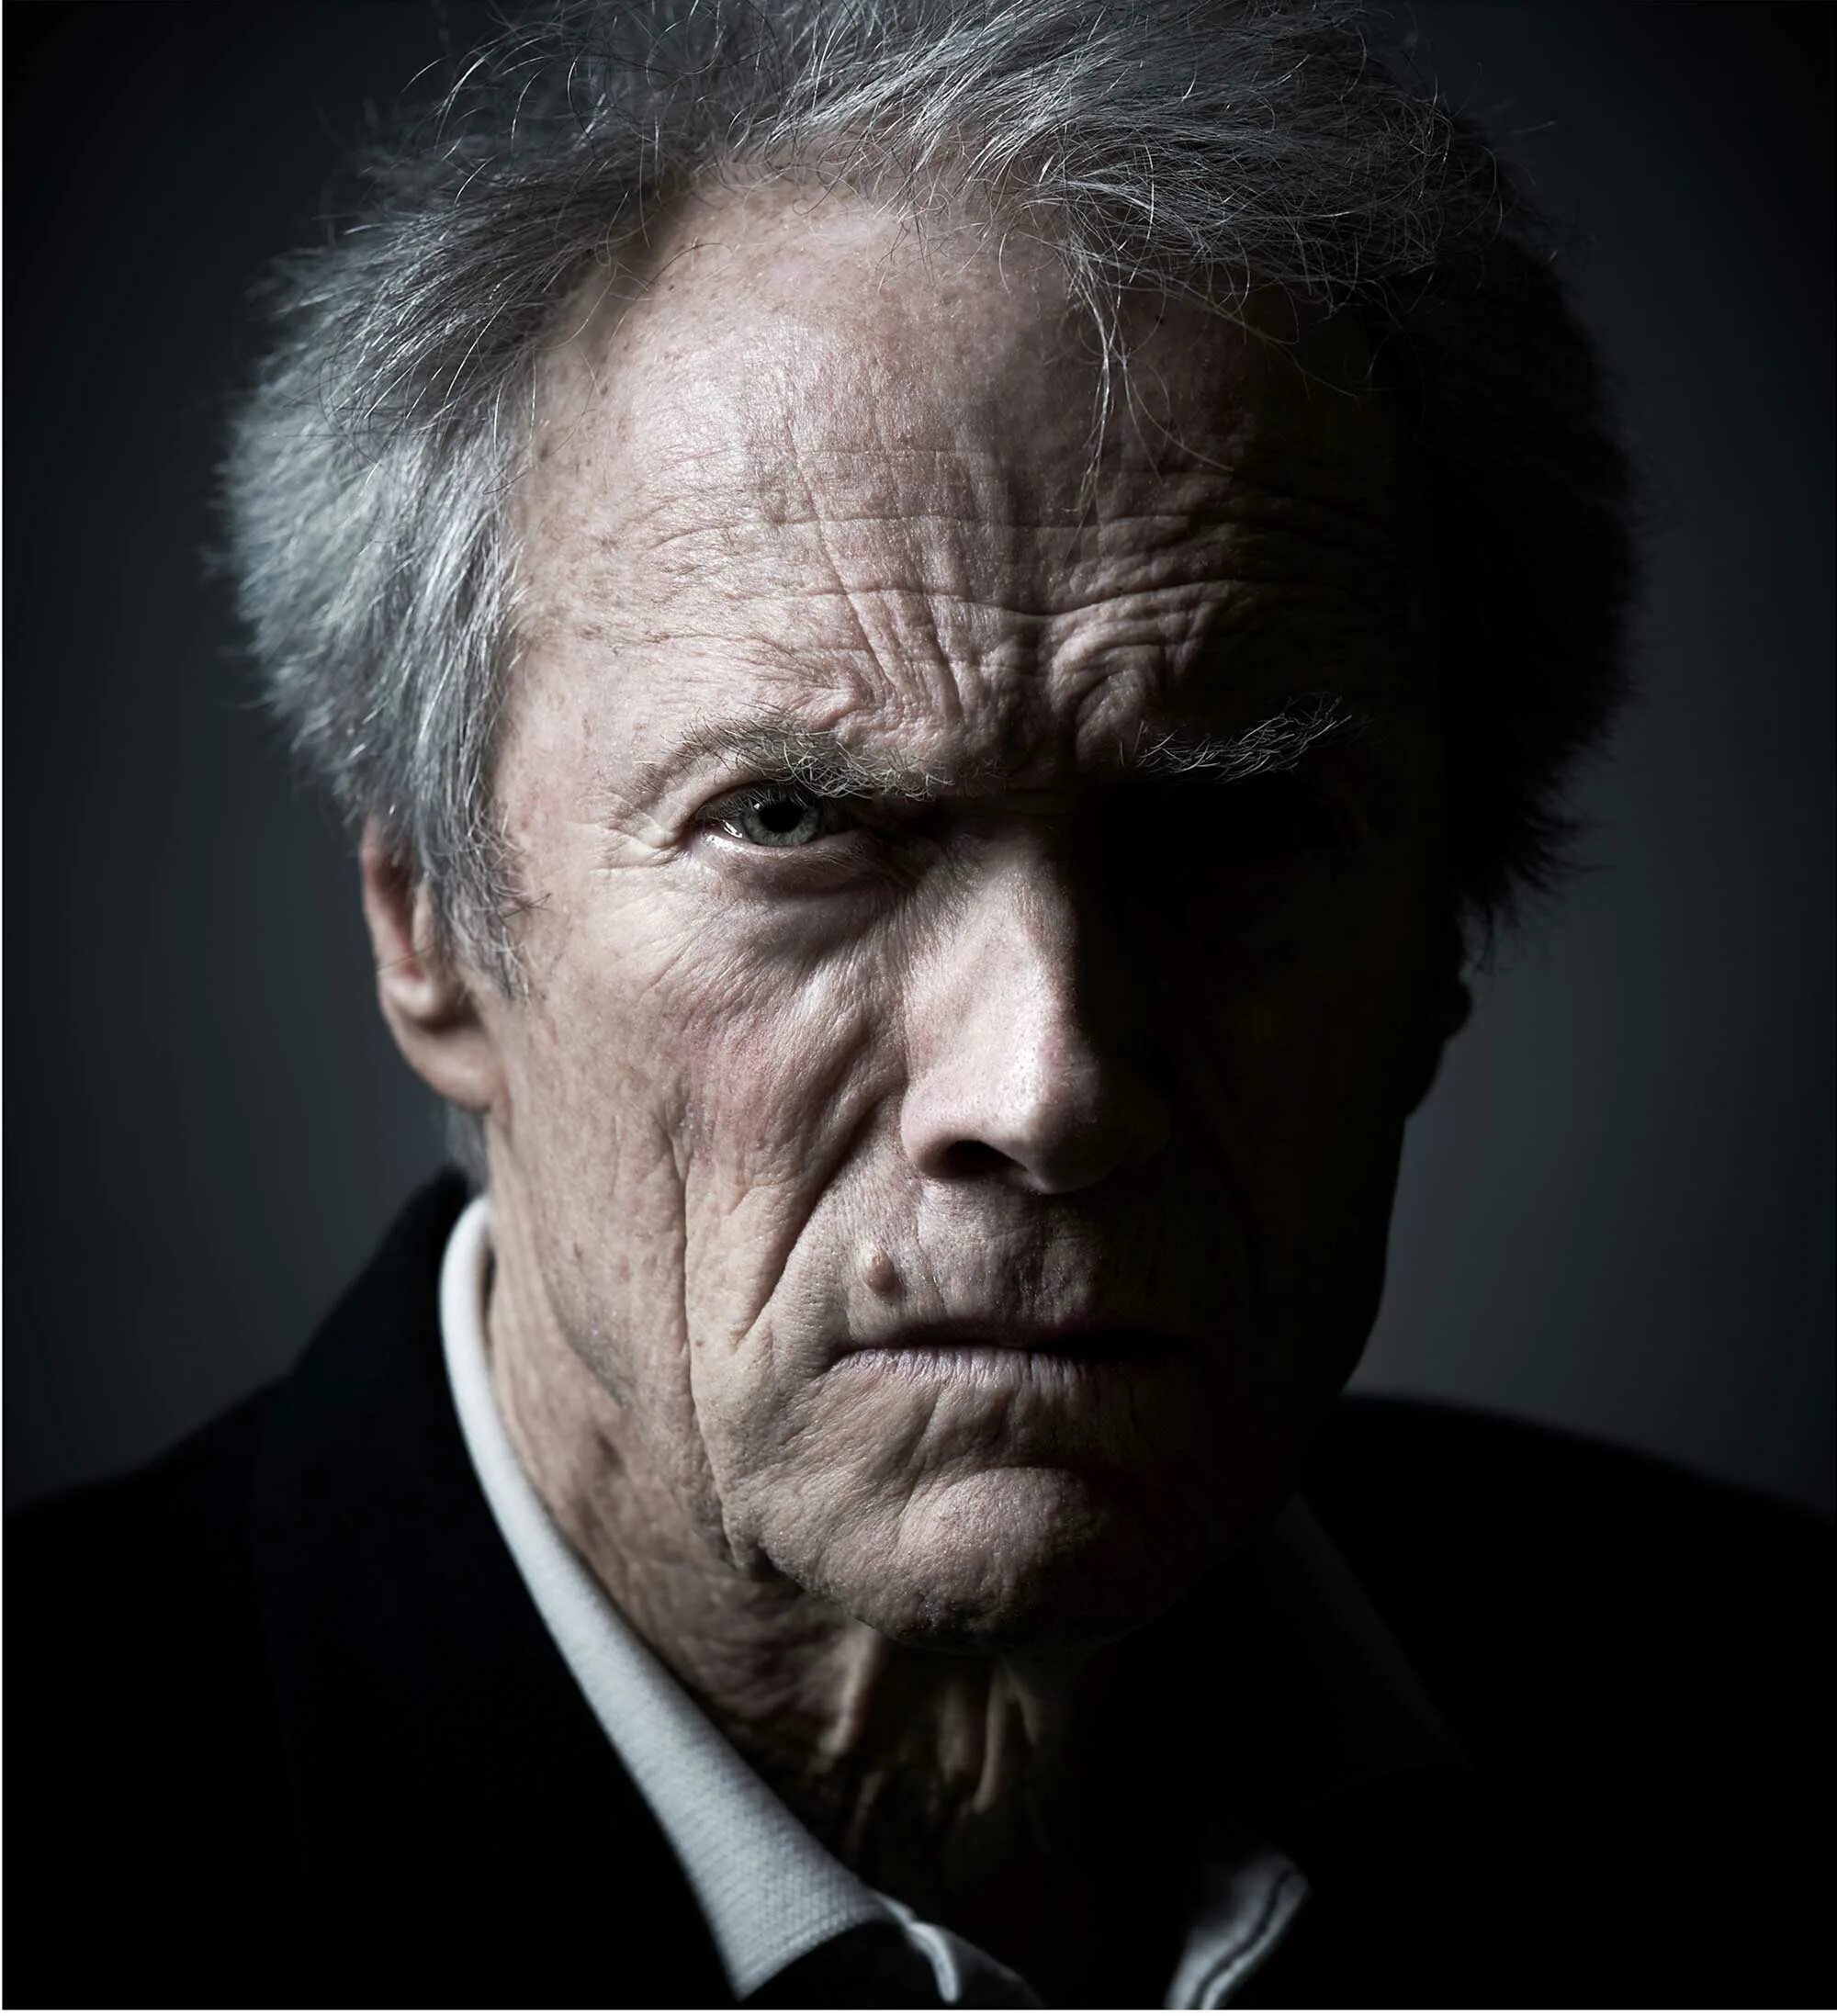 Форум старый мужчина. Клинт Иствуд. Клинт Иствуд портрет. Энди Готтс. Фотопортреты Энди Готтс.